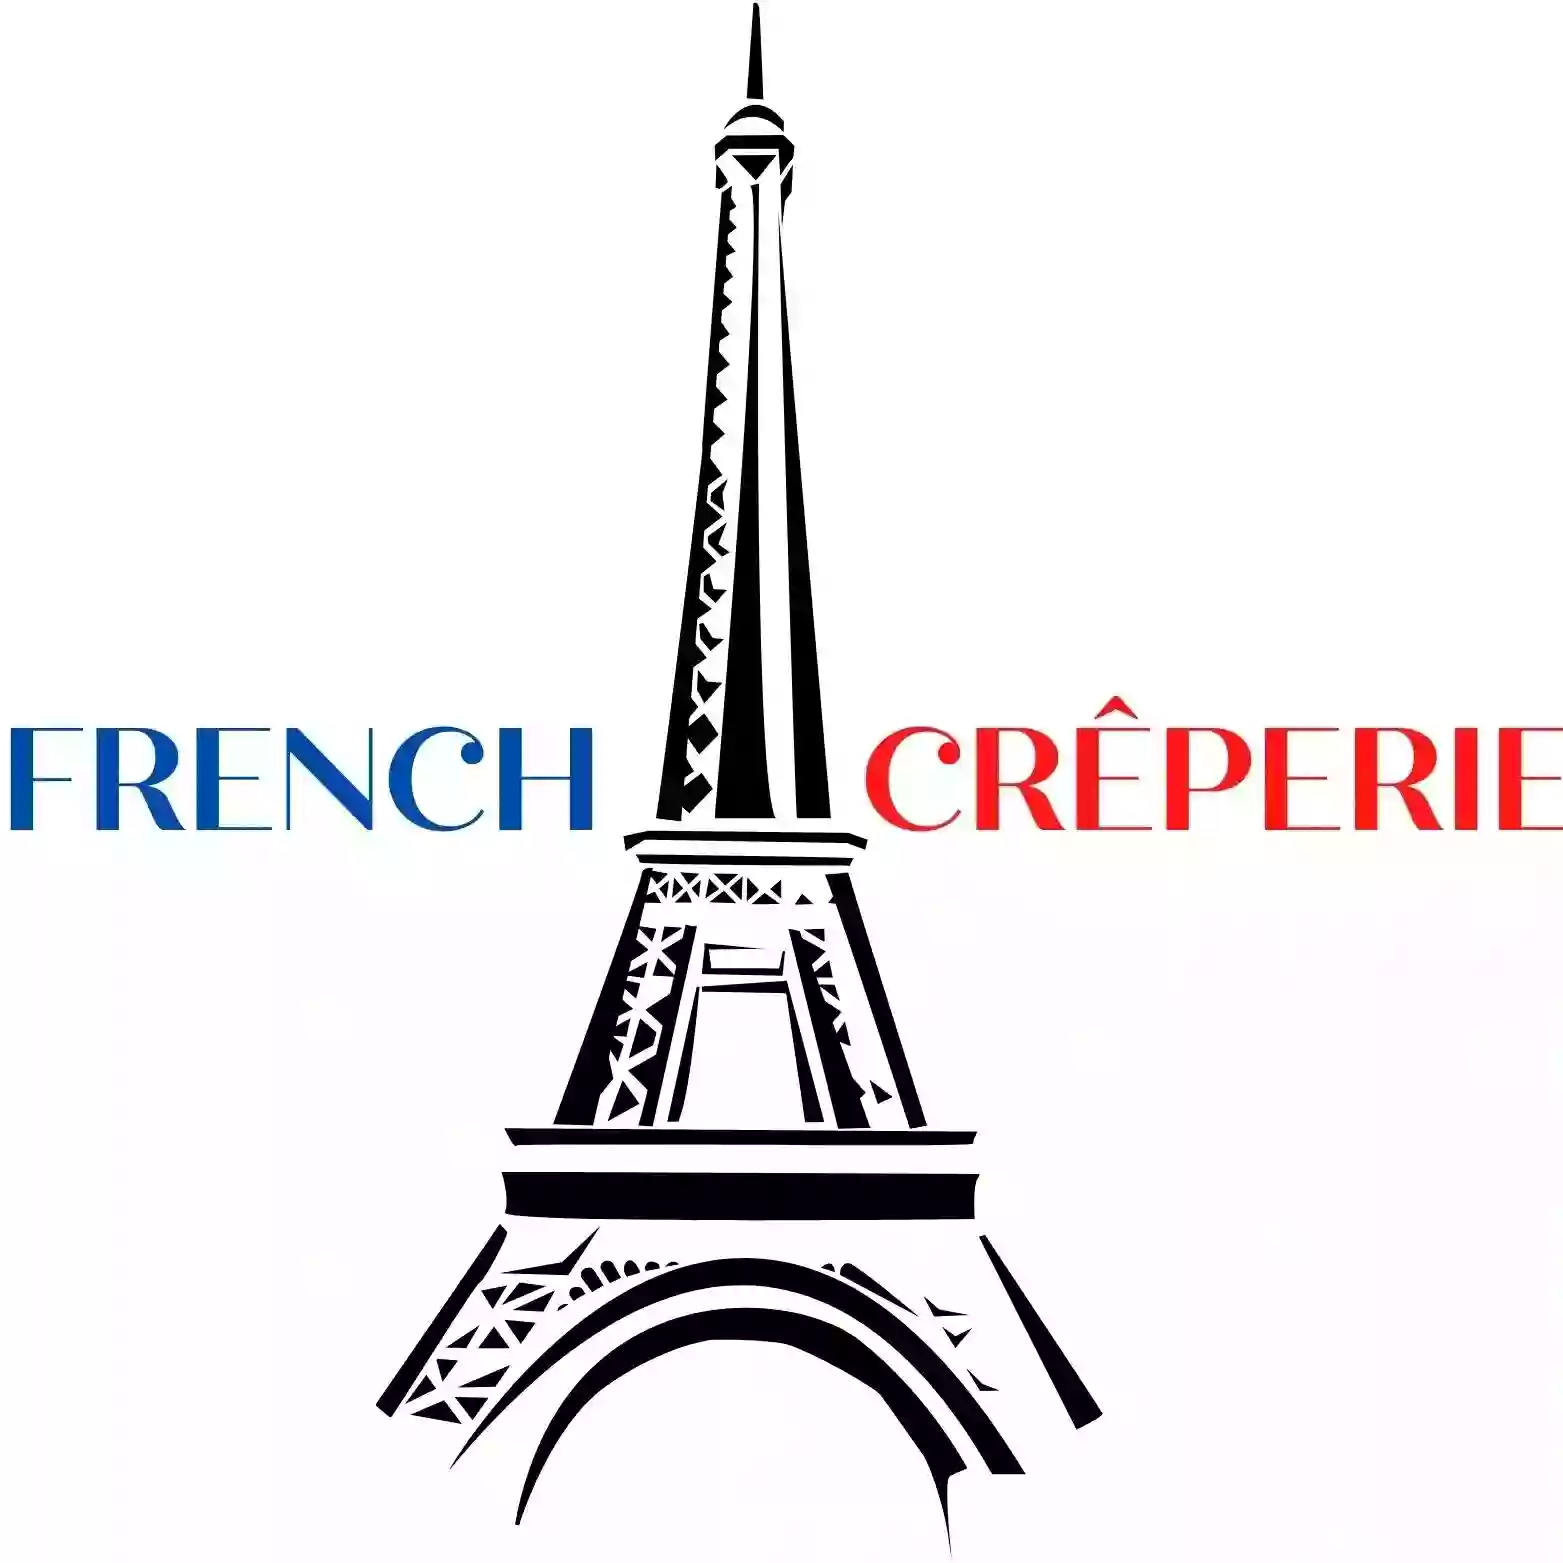 French Crêperie